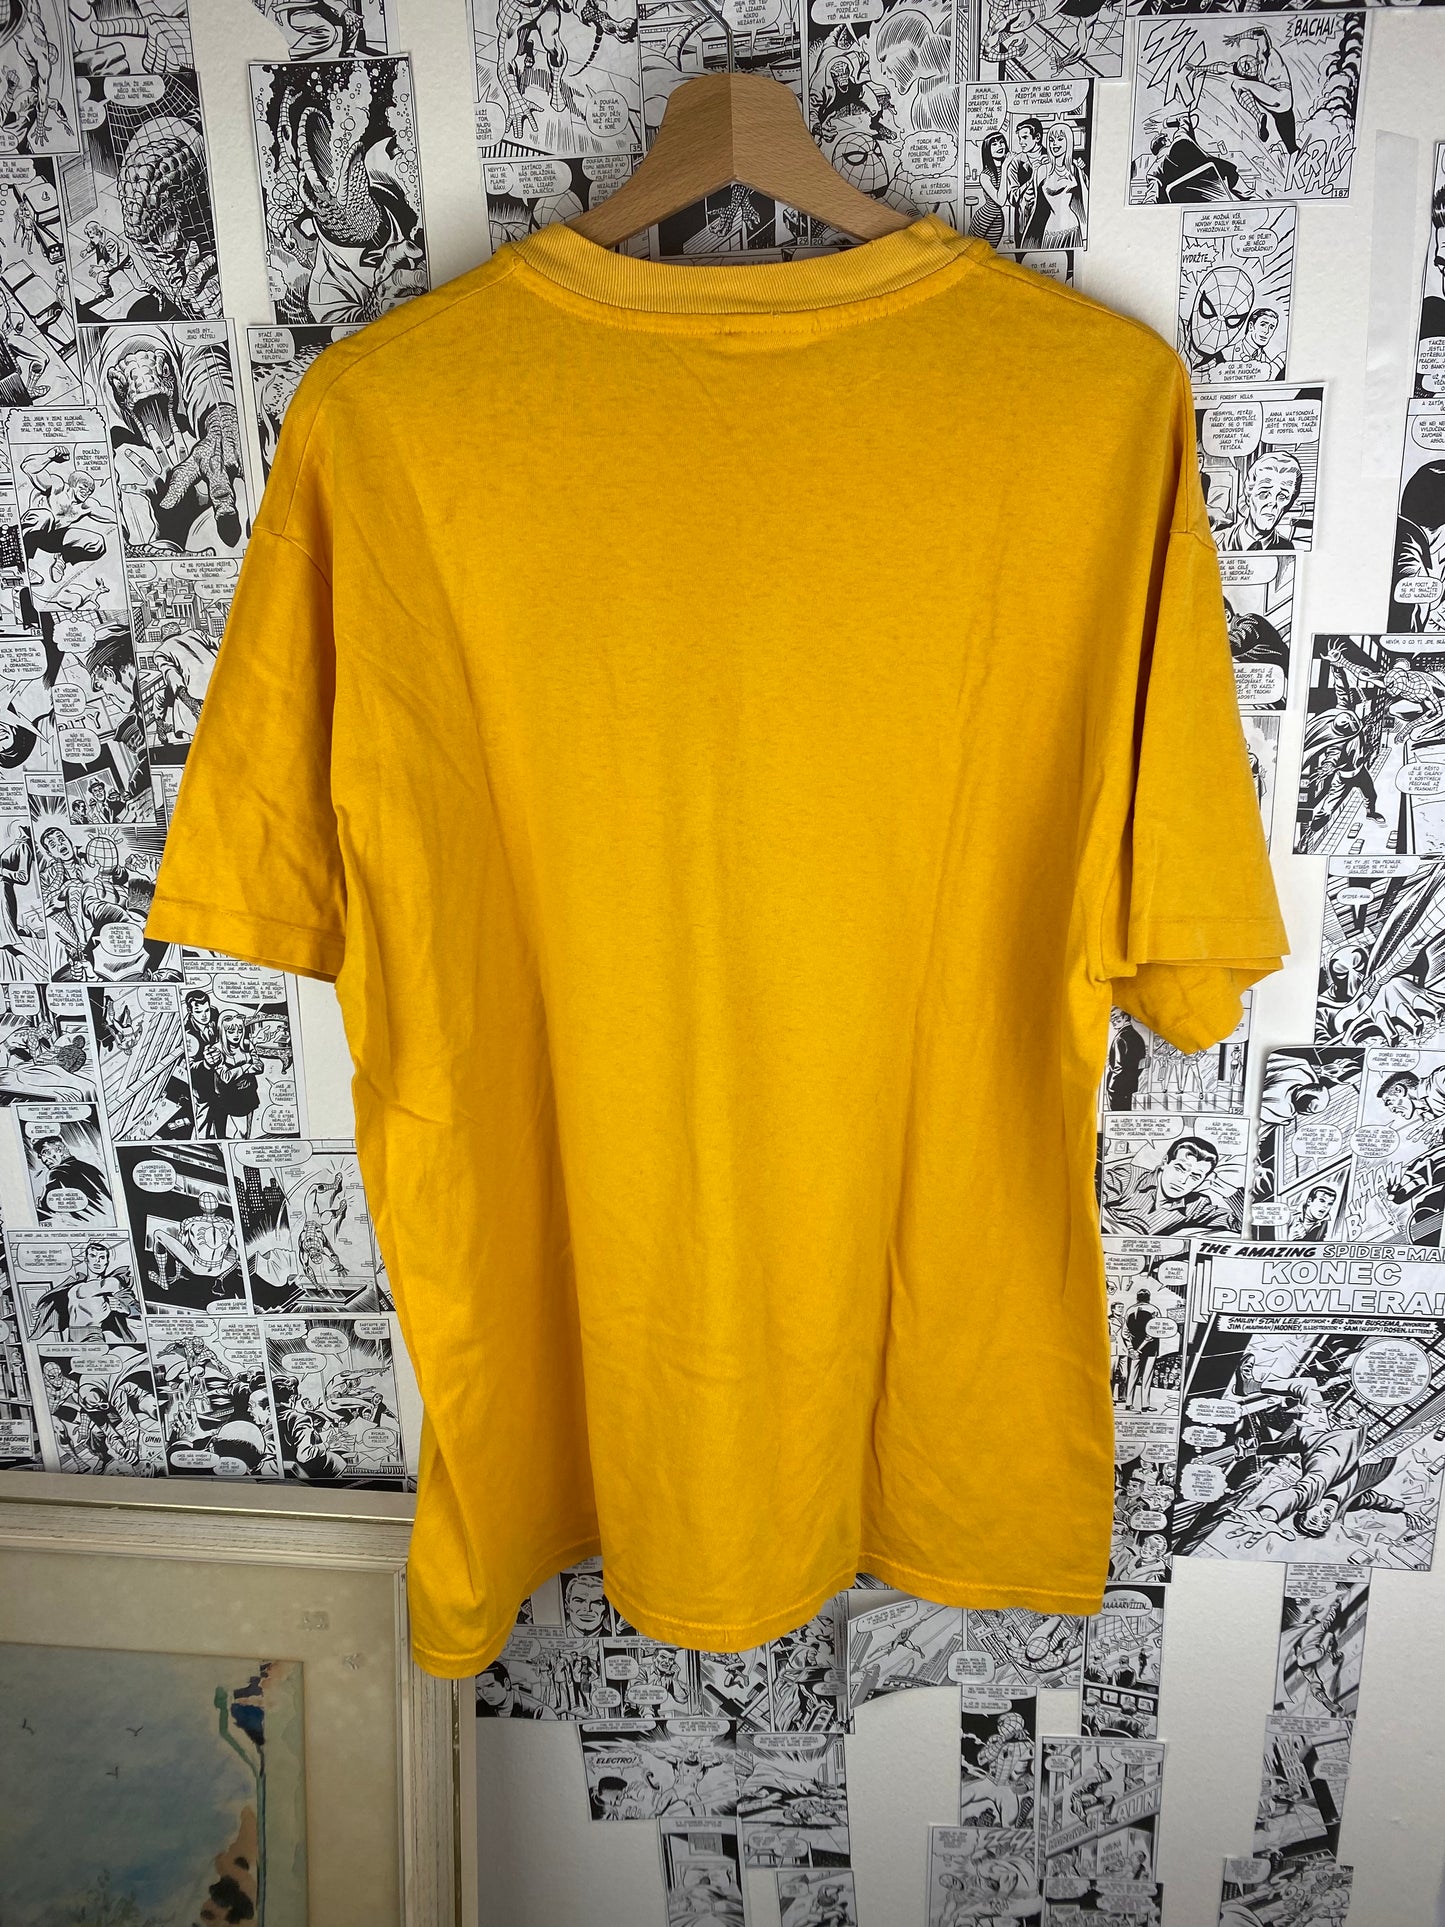 Vintage Peanuts 80s t-shirt - size L